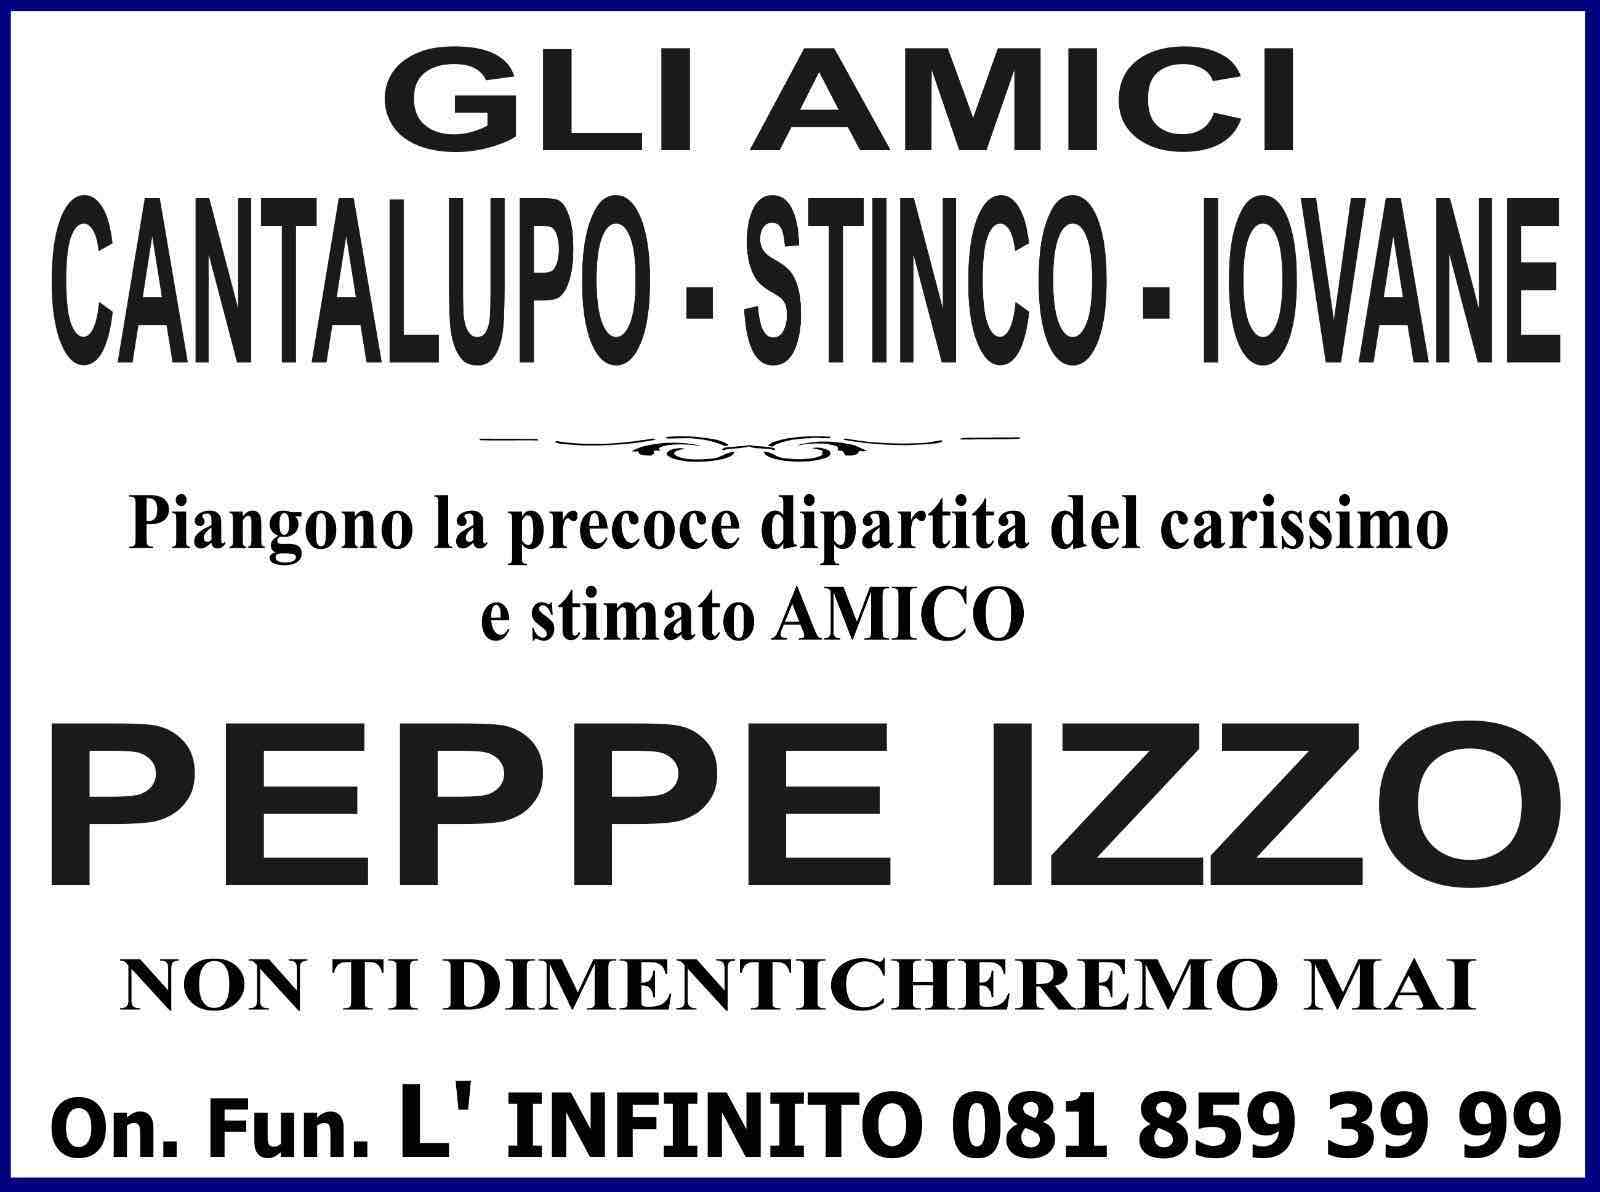 Giuseppe Izzo